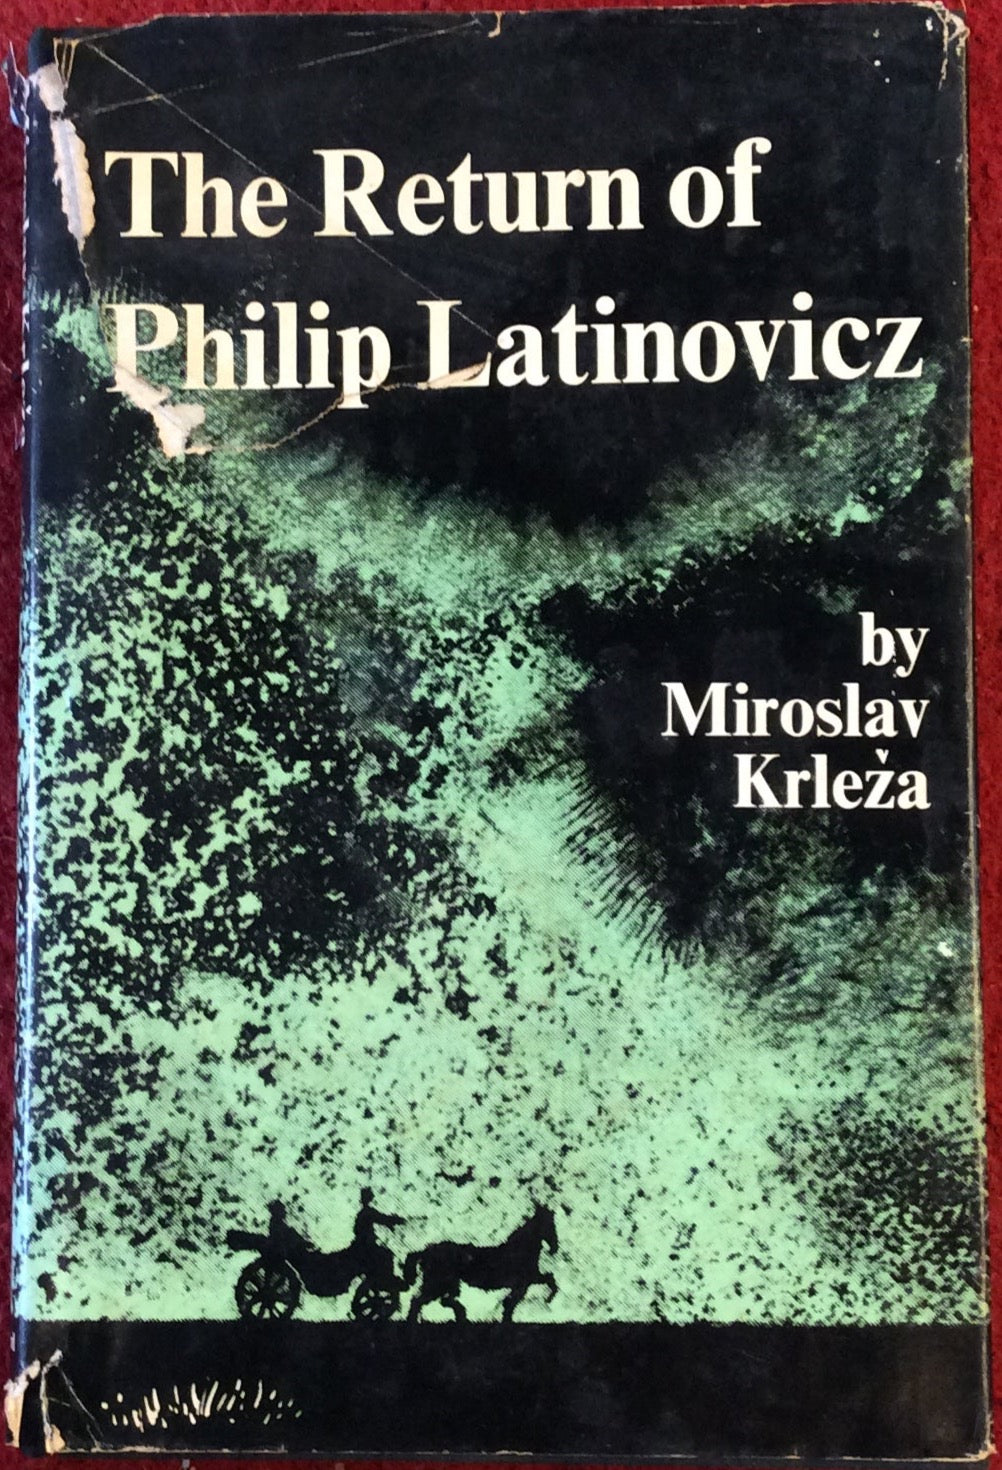 The Return of Philip Latinovicz, Miroslav Krleža, Vangaurd, 1969*